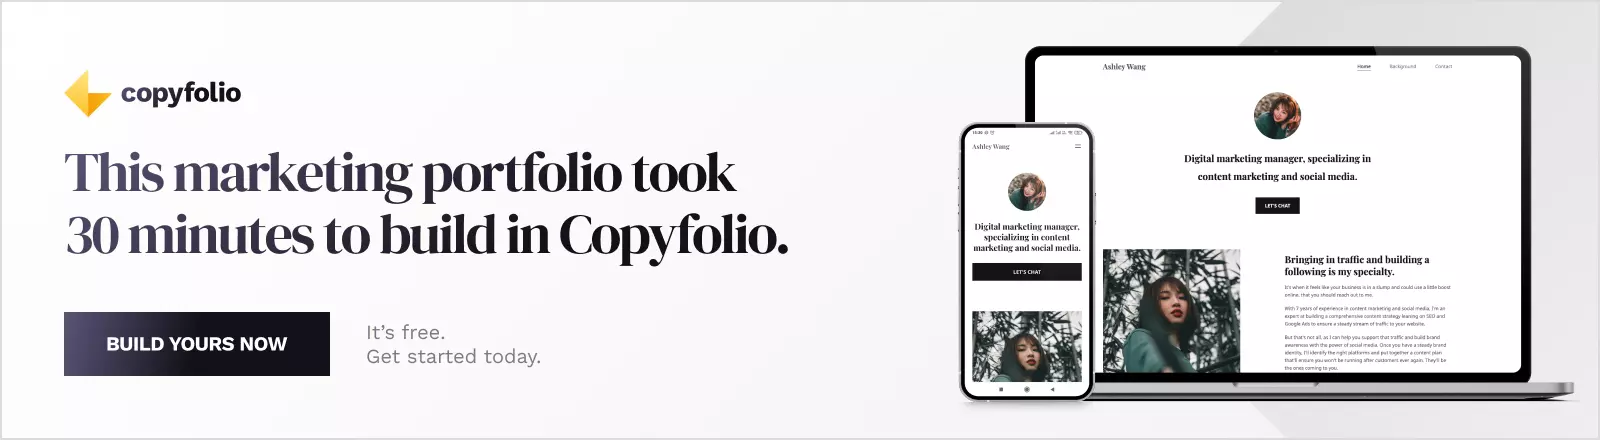 This marketing portfolio took 30 minutes to build in Copyfolio. Build yours now. It's free.